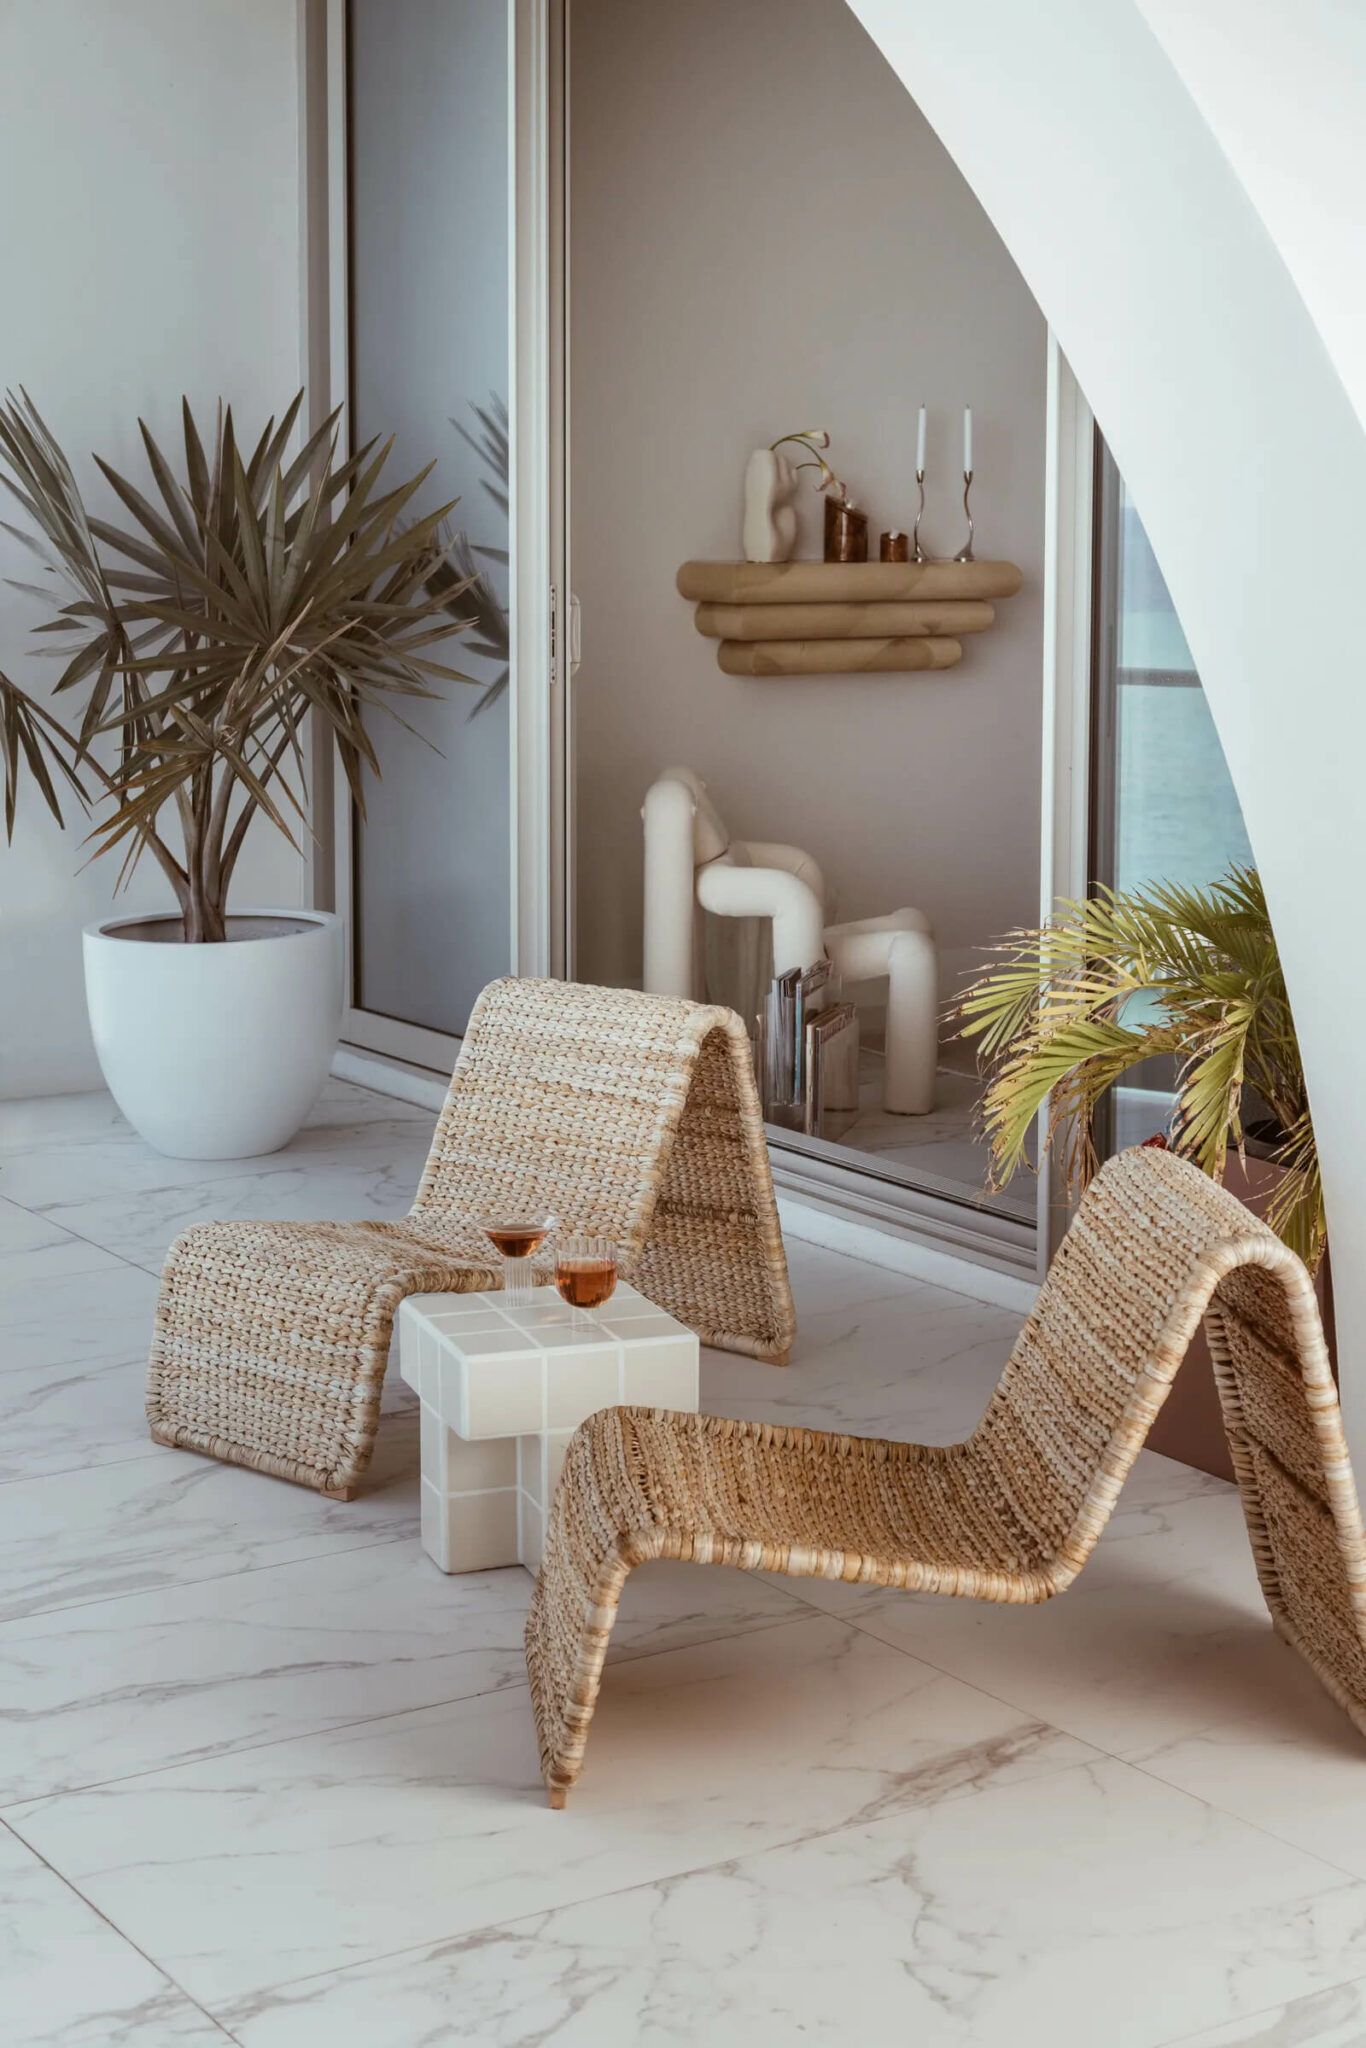 Miami Lana del Rey Apartment  designed by the interior designer Tiffany Howell